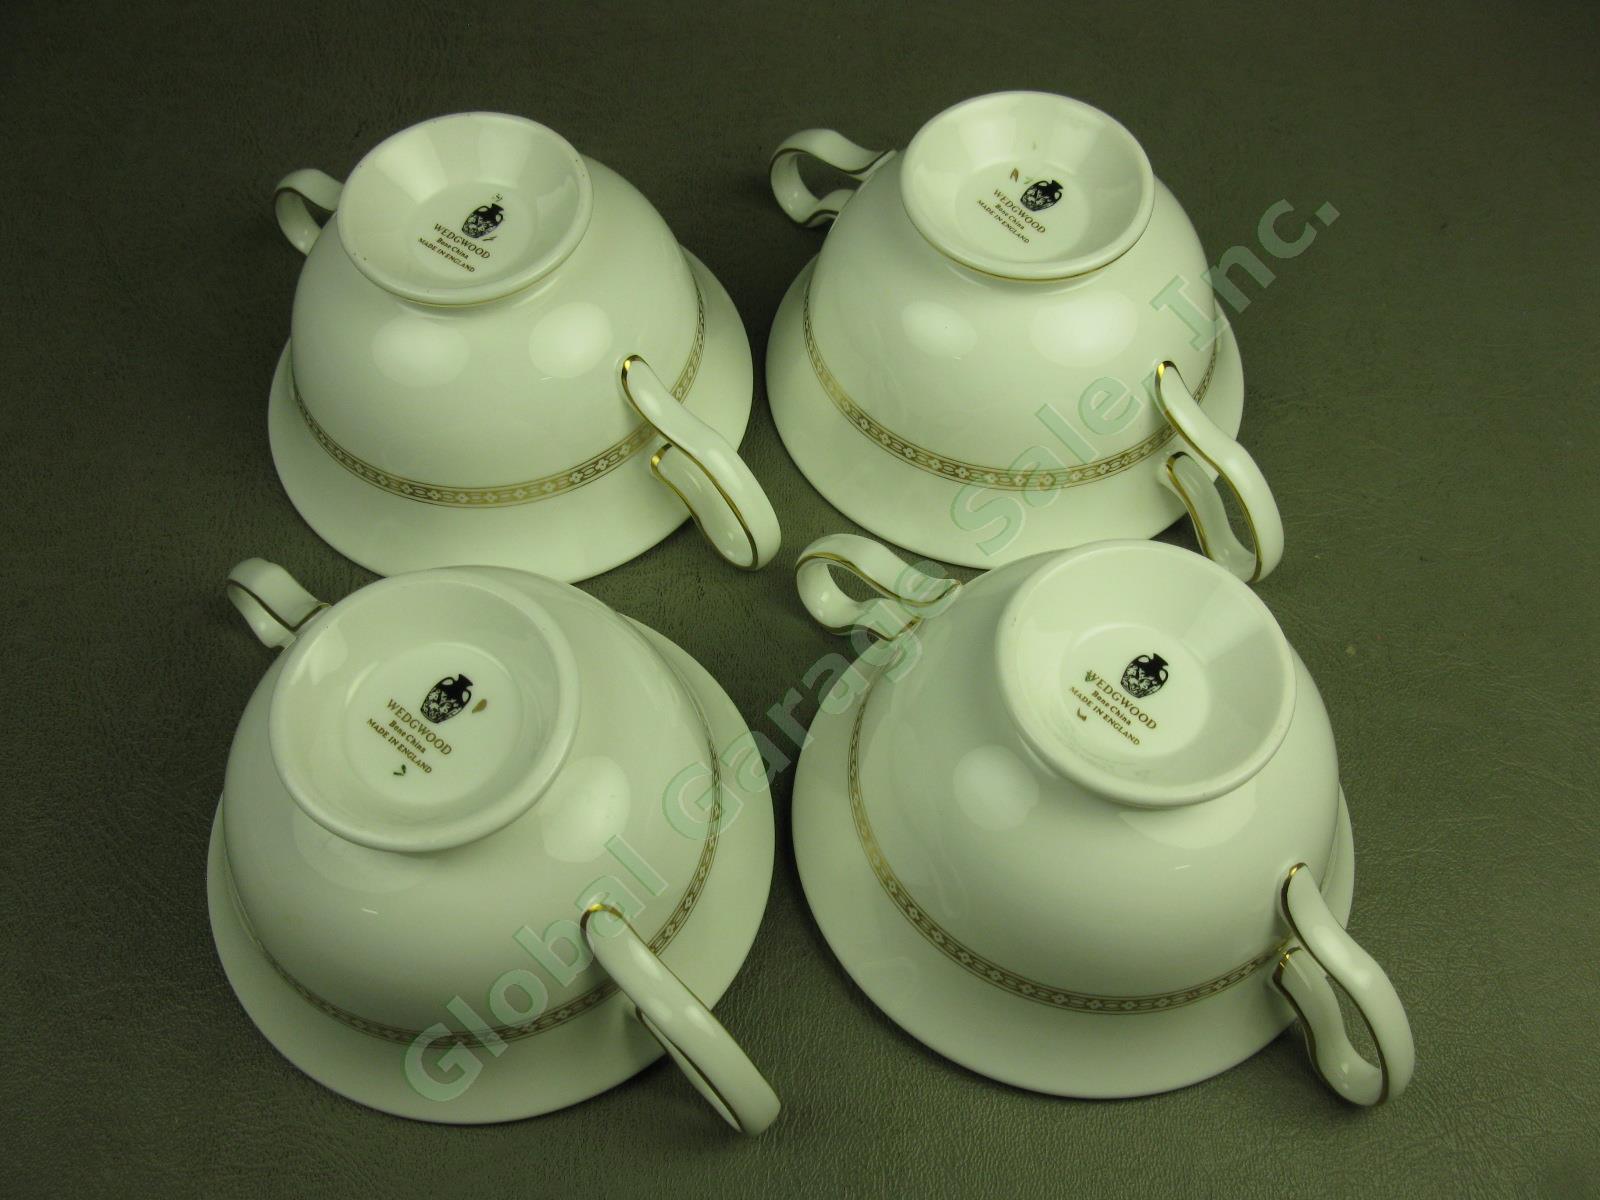 4 Wedgwood Gold Florentine Dragon China Cream Soup Bowls + Saucers Set Lot W4219 6